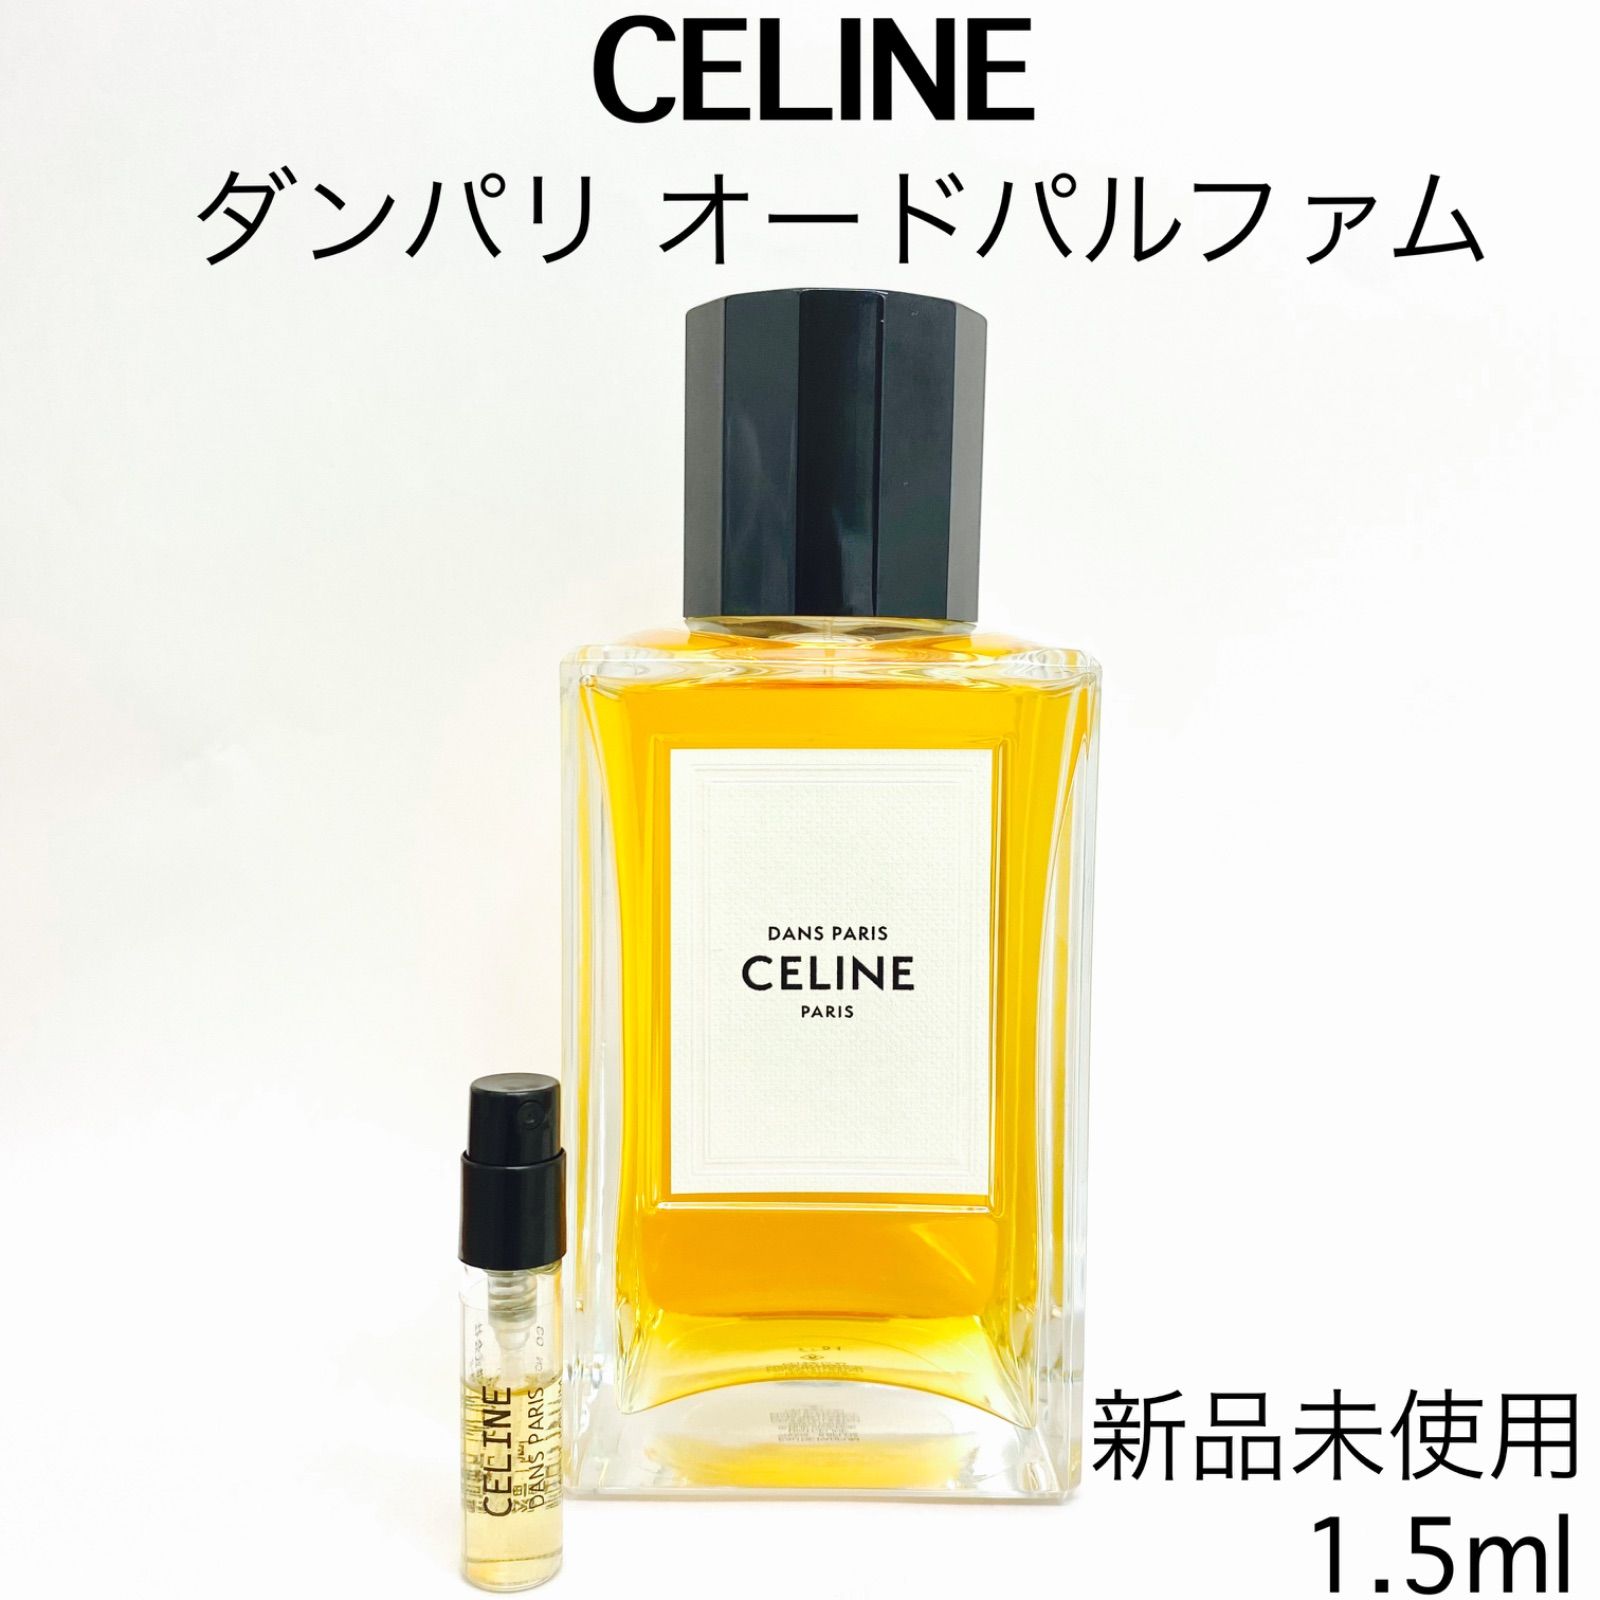 CELINE セリーヌ ダンパリ 香水 1.5ml - セット割実施☆ - メルカリ